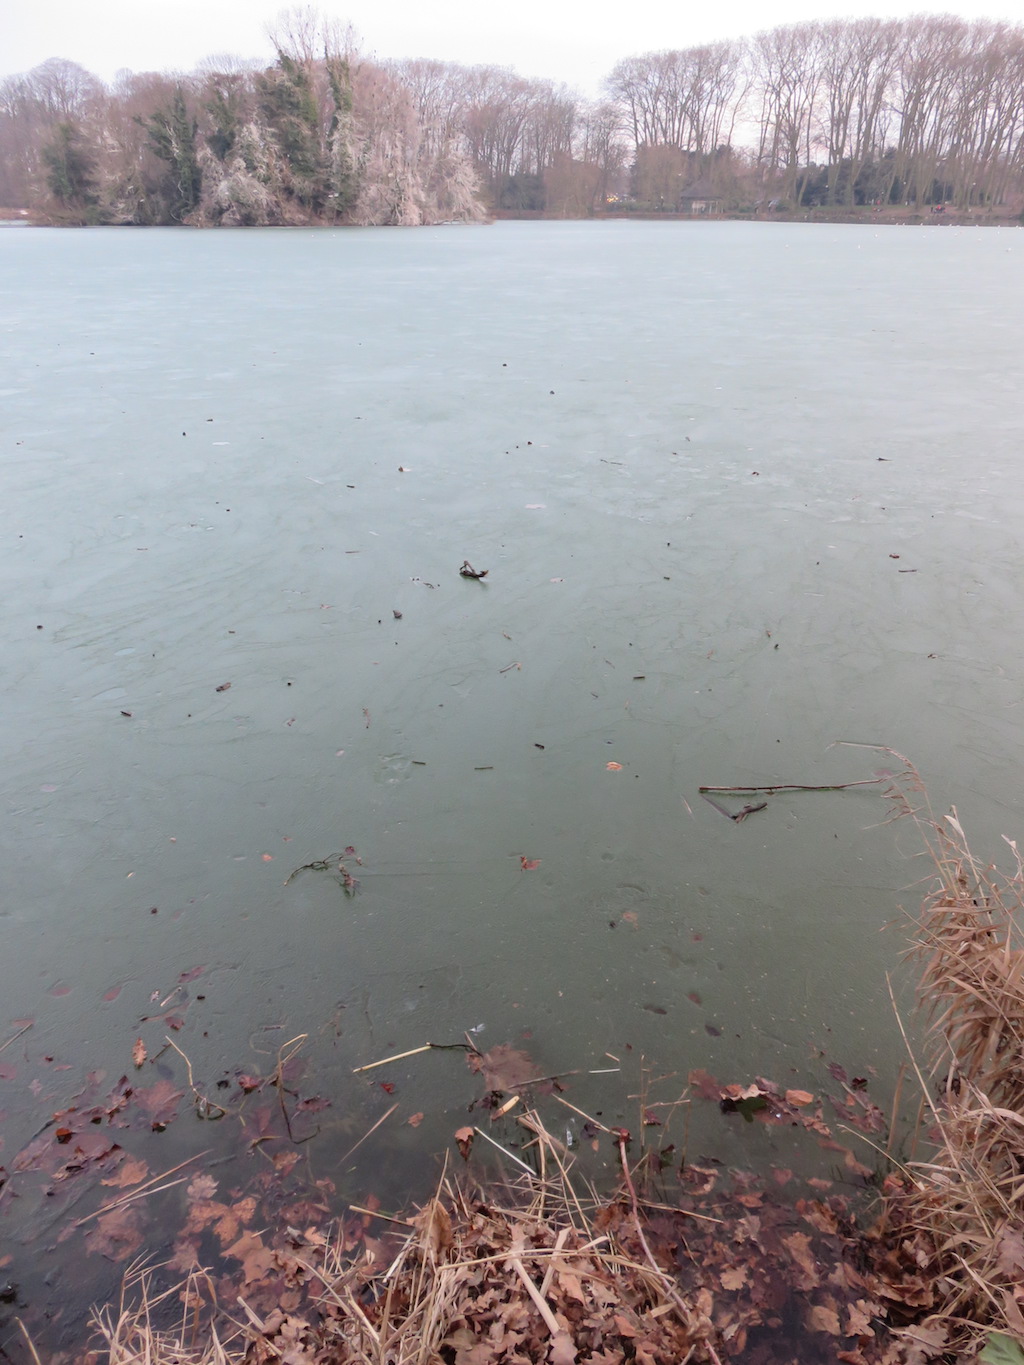 The lake is frozen edge to edge.